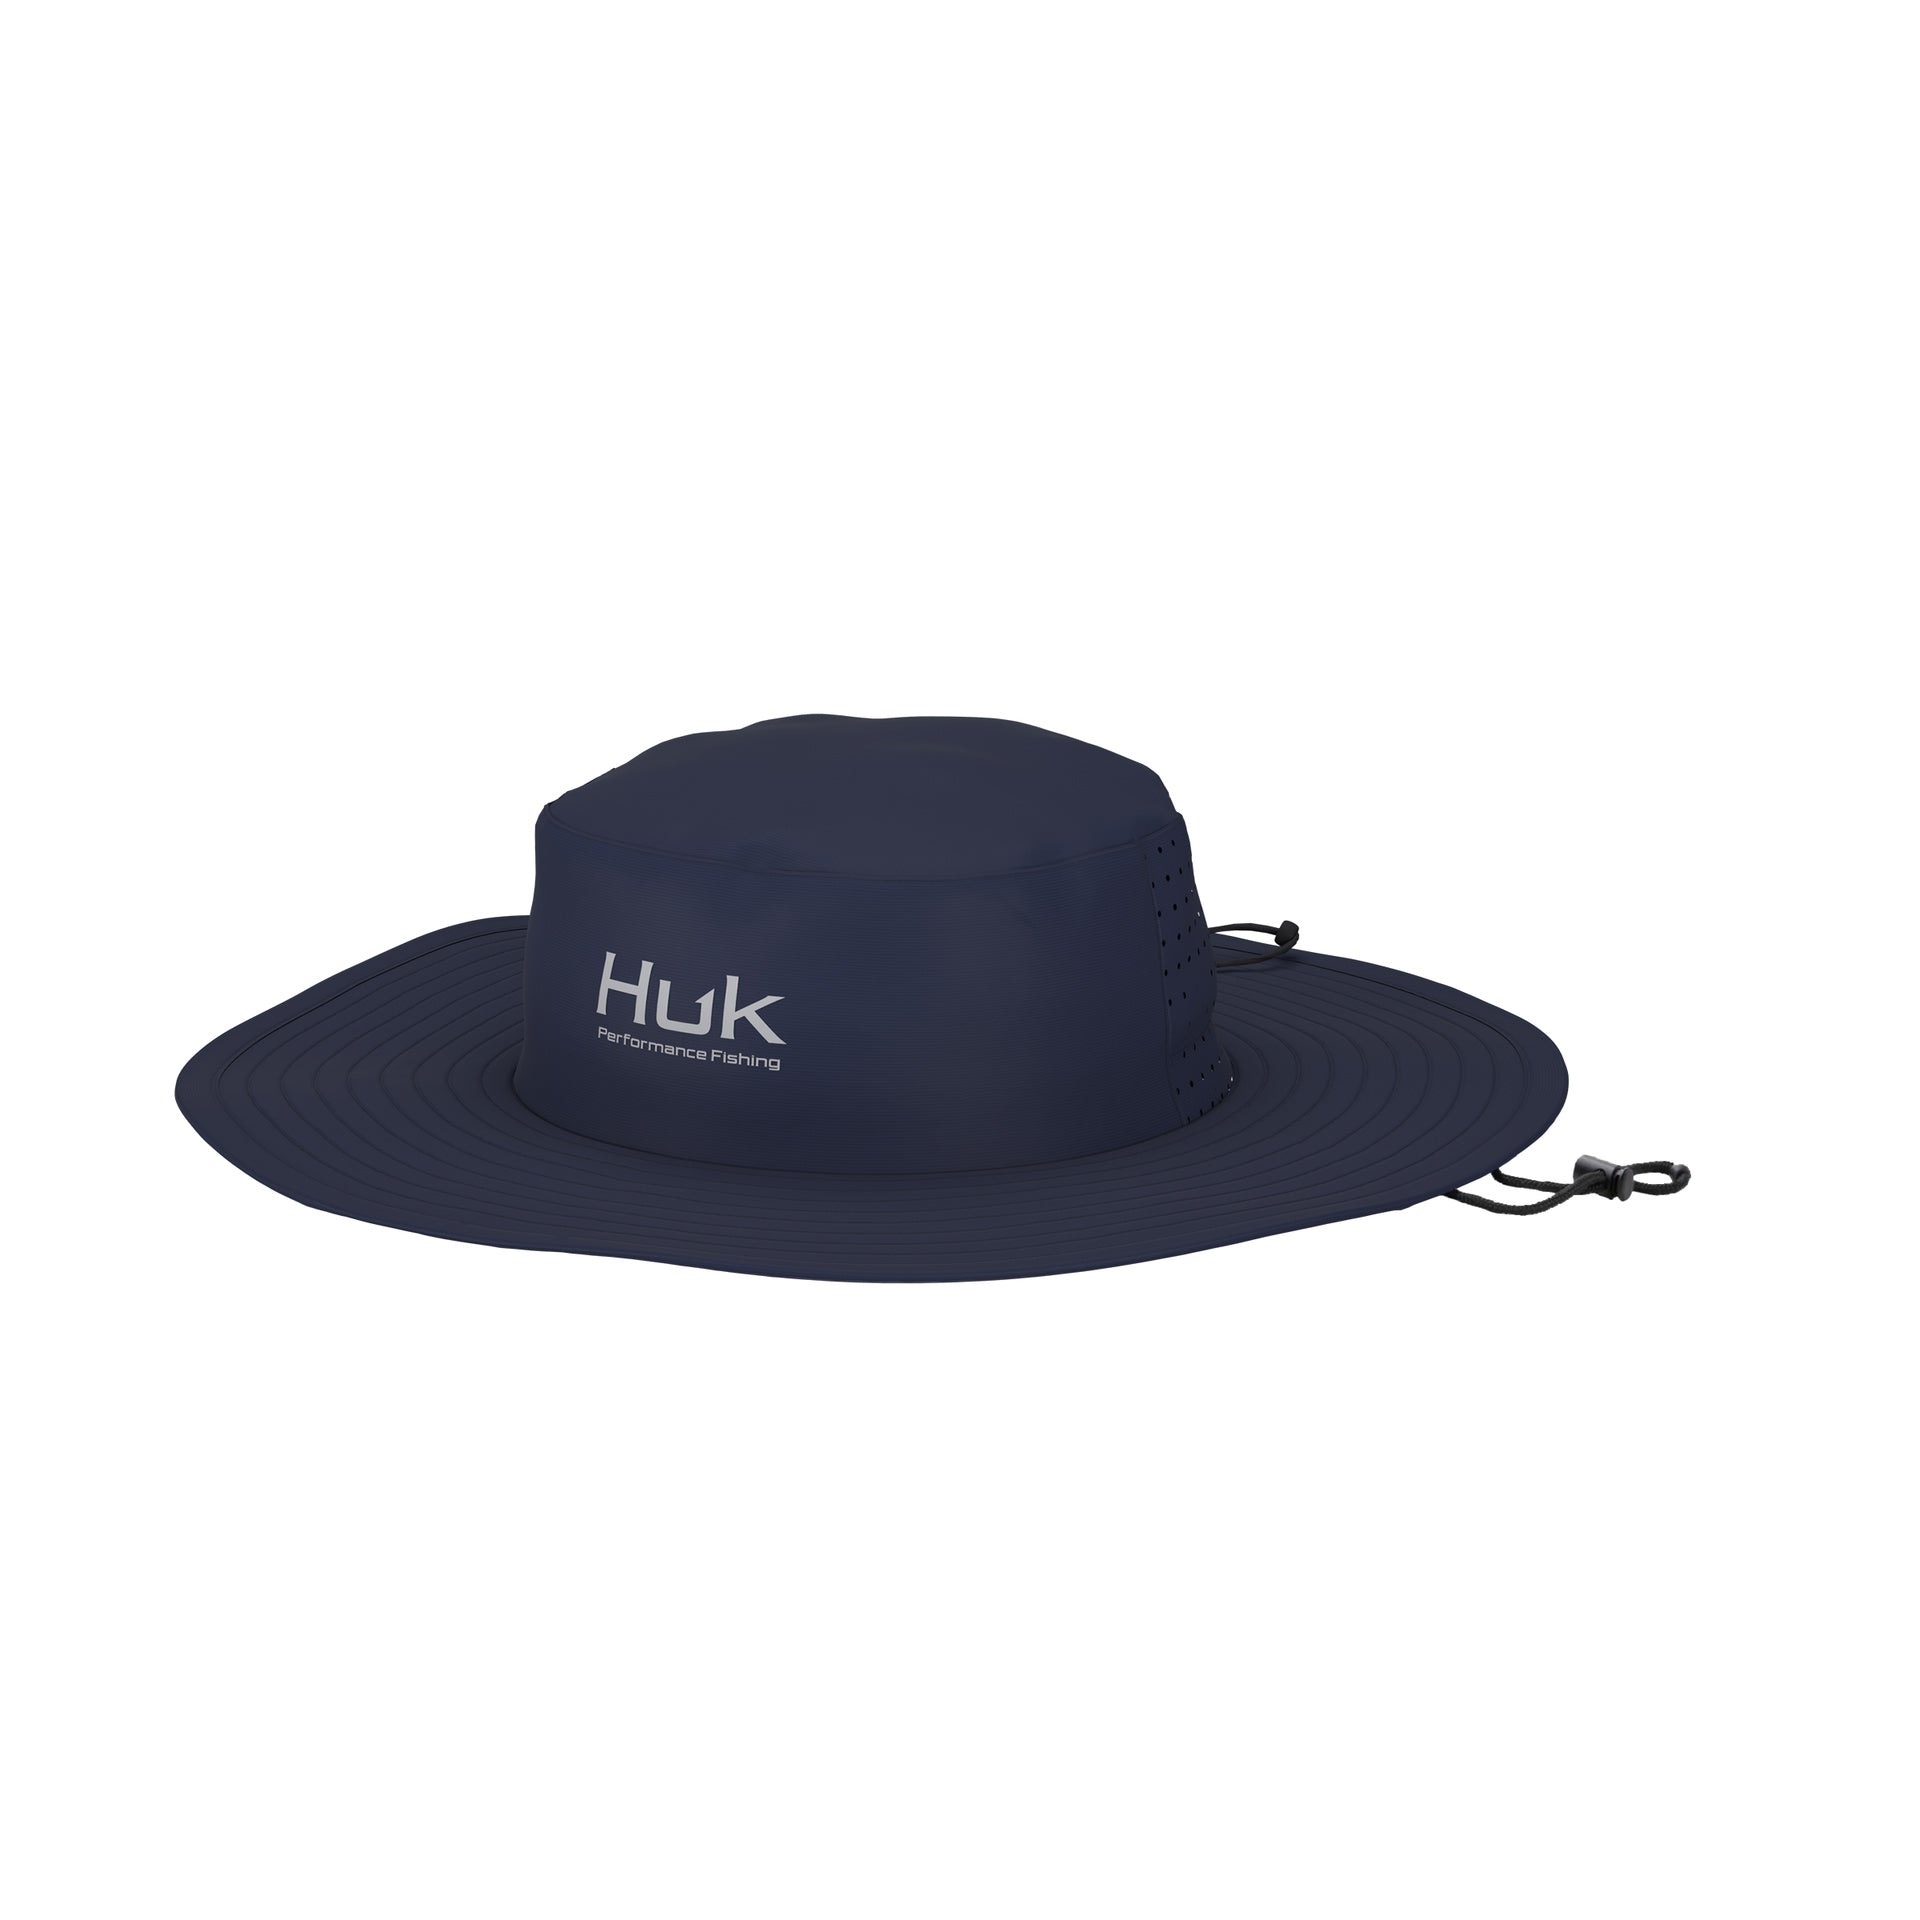  HUK Boonie, Wide Brim Fishing Hat for Men, Cane Bay